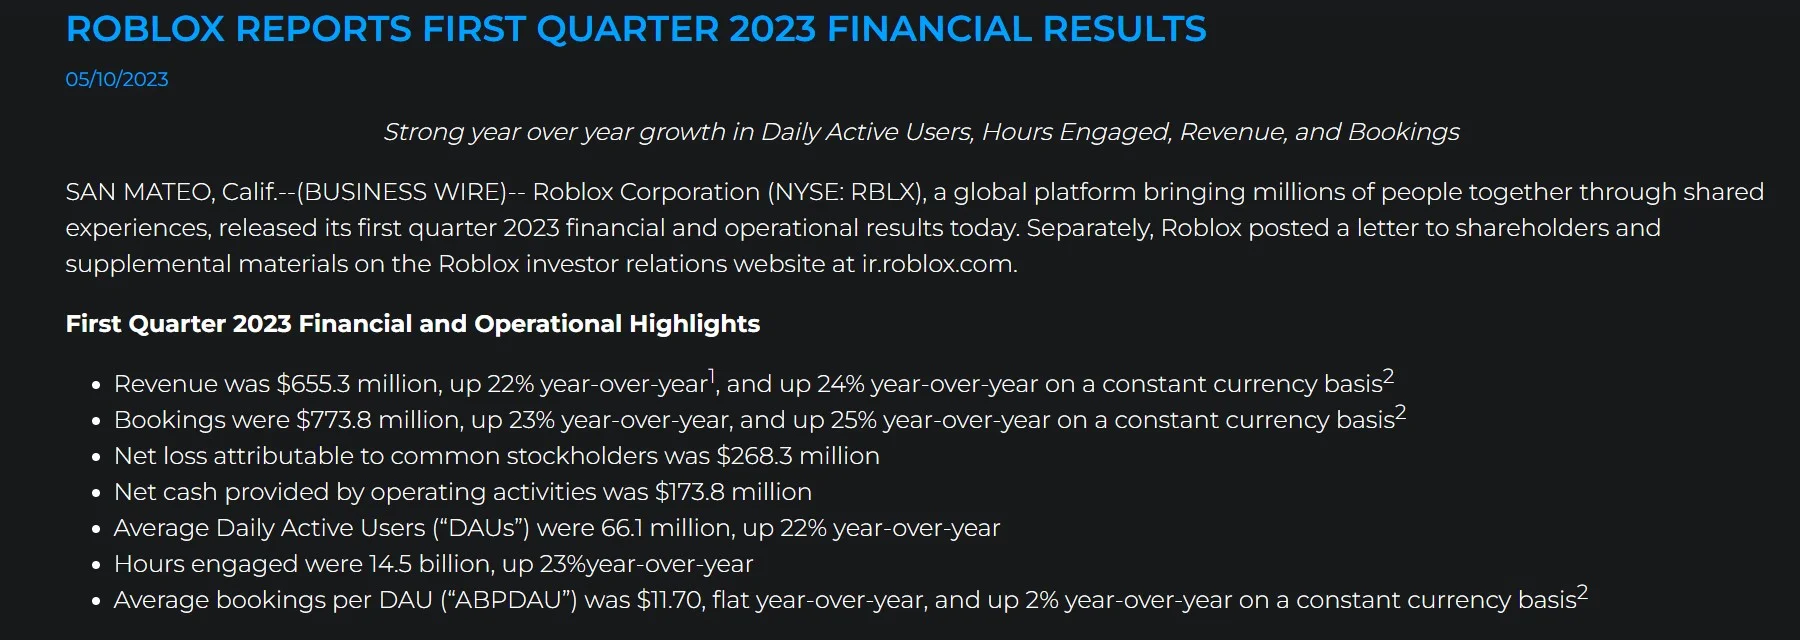 Roblox saw $655.3 million in Q1 revenue, 14.5 billion 'engaged hours